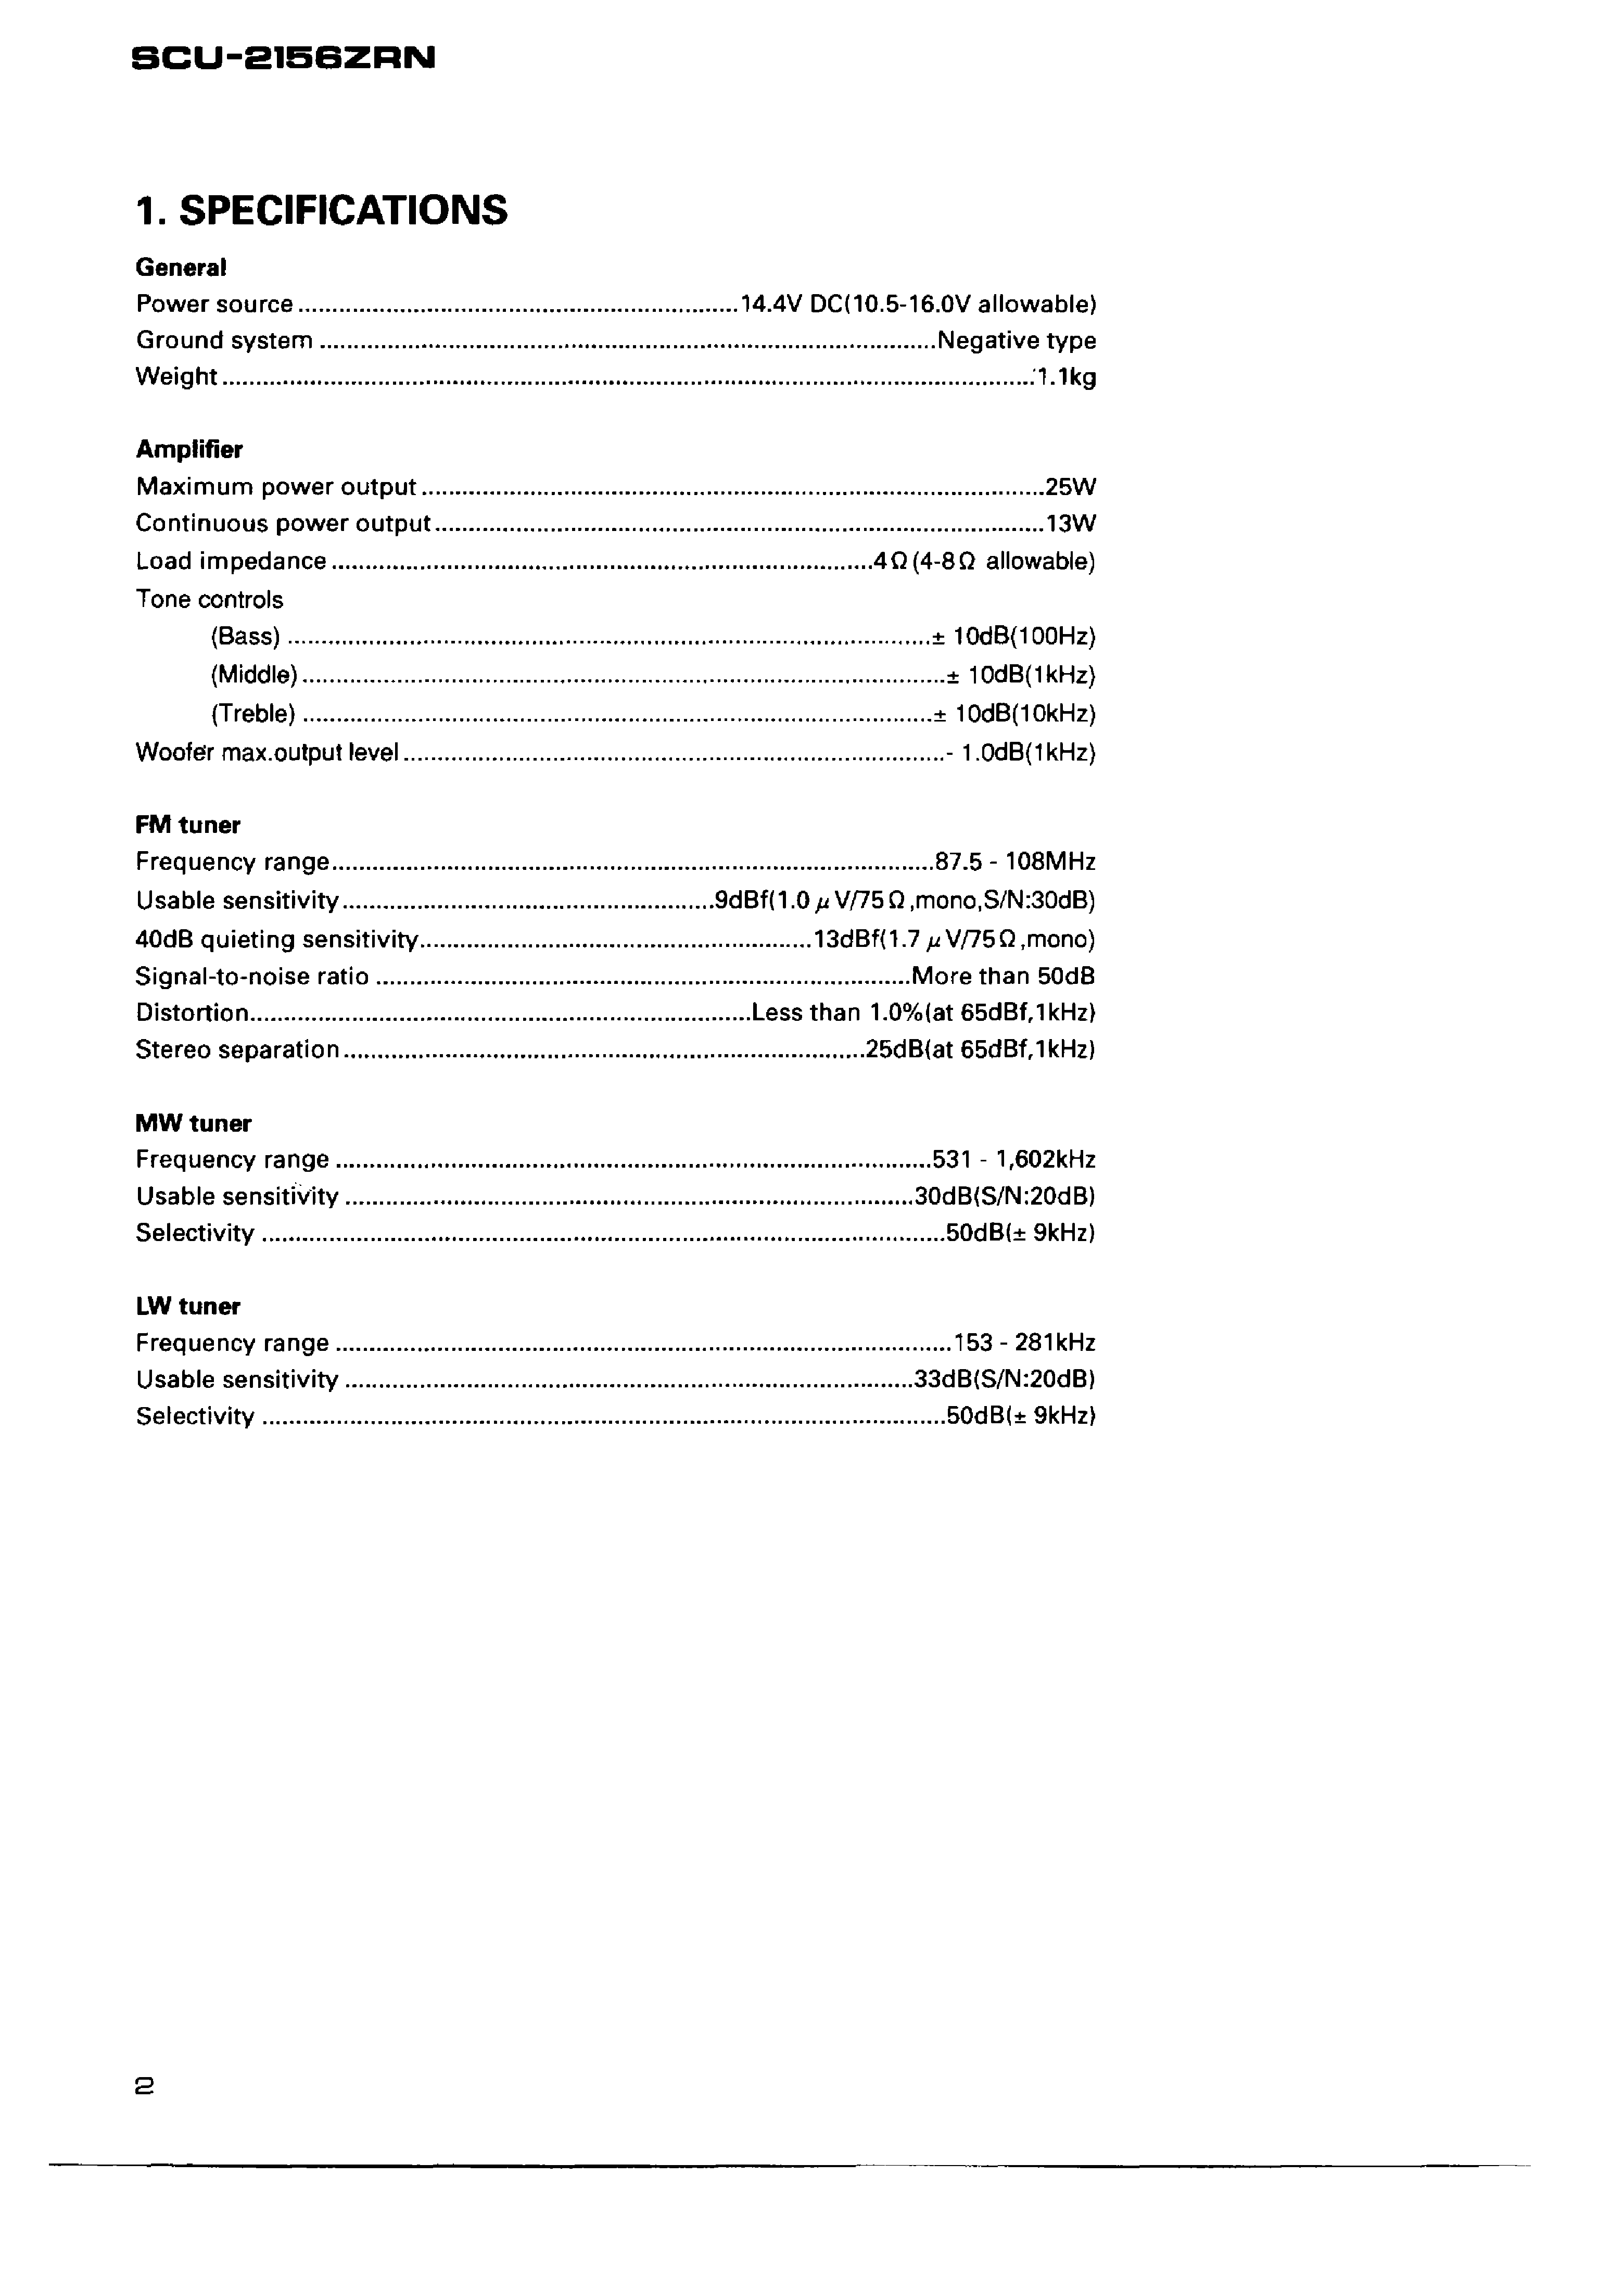 PIONEER SCU-2156 service manual (2nd page)